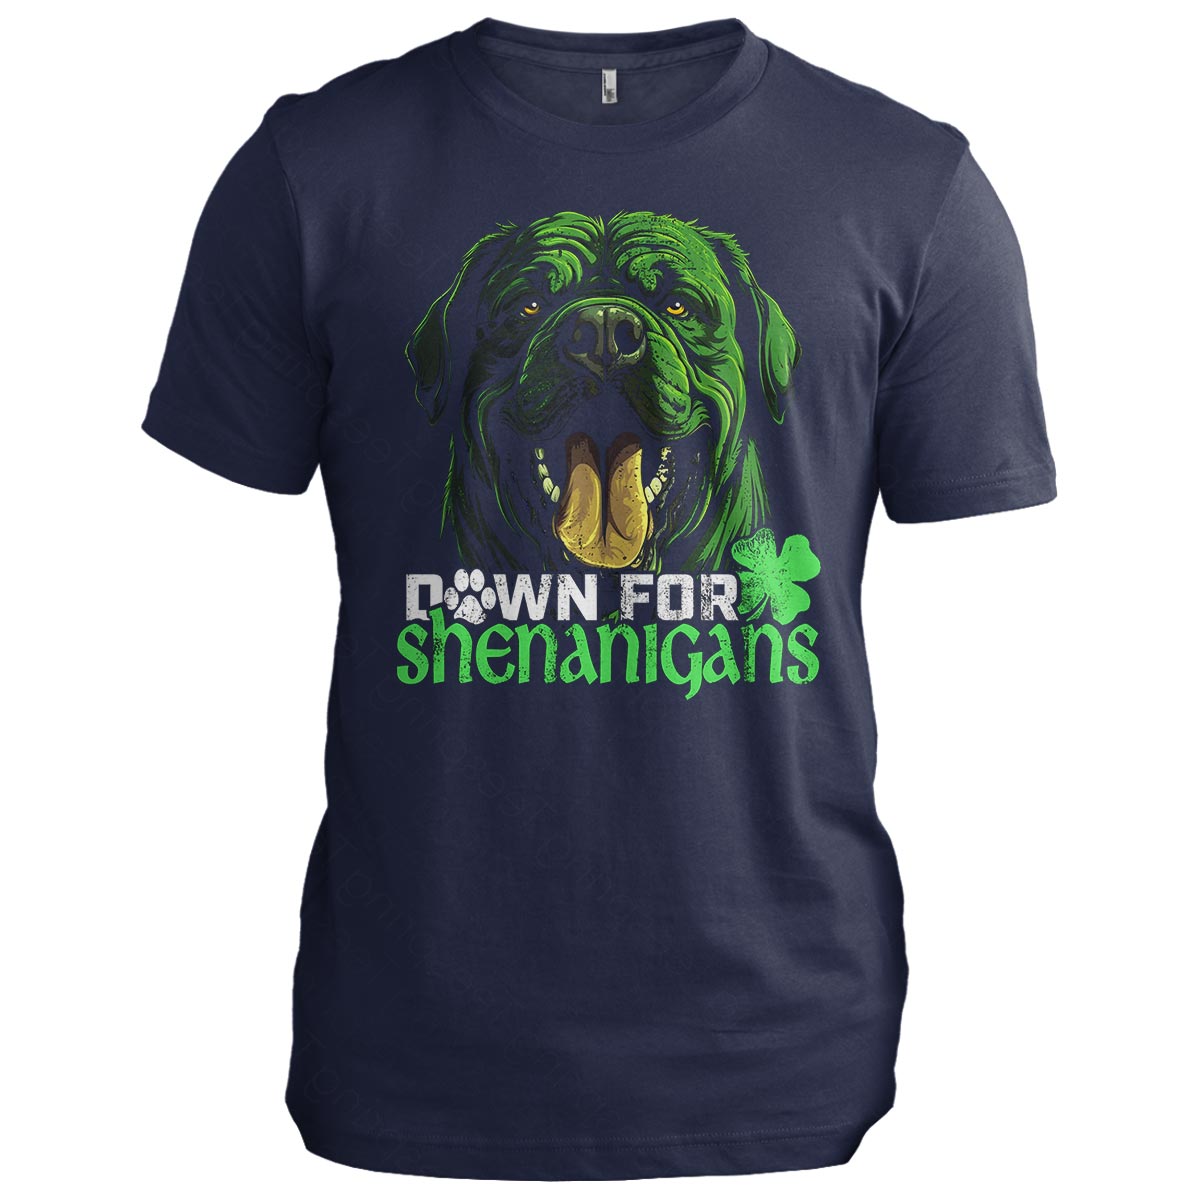 Down for Shenanigans: Mastiff